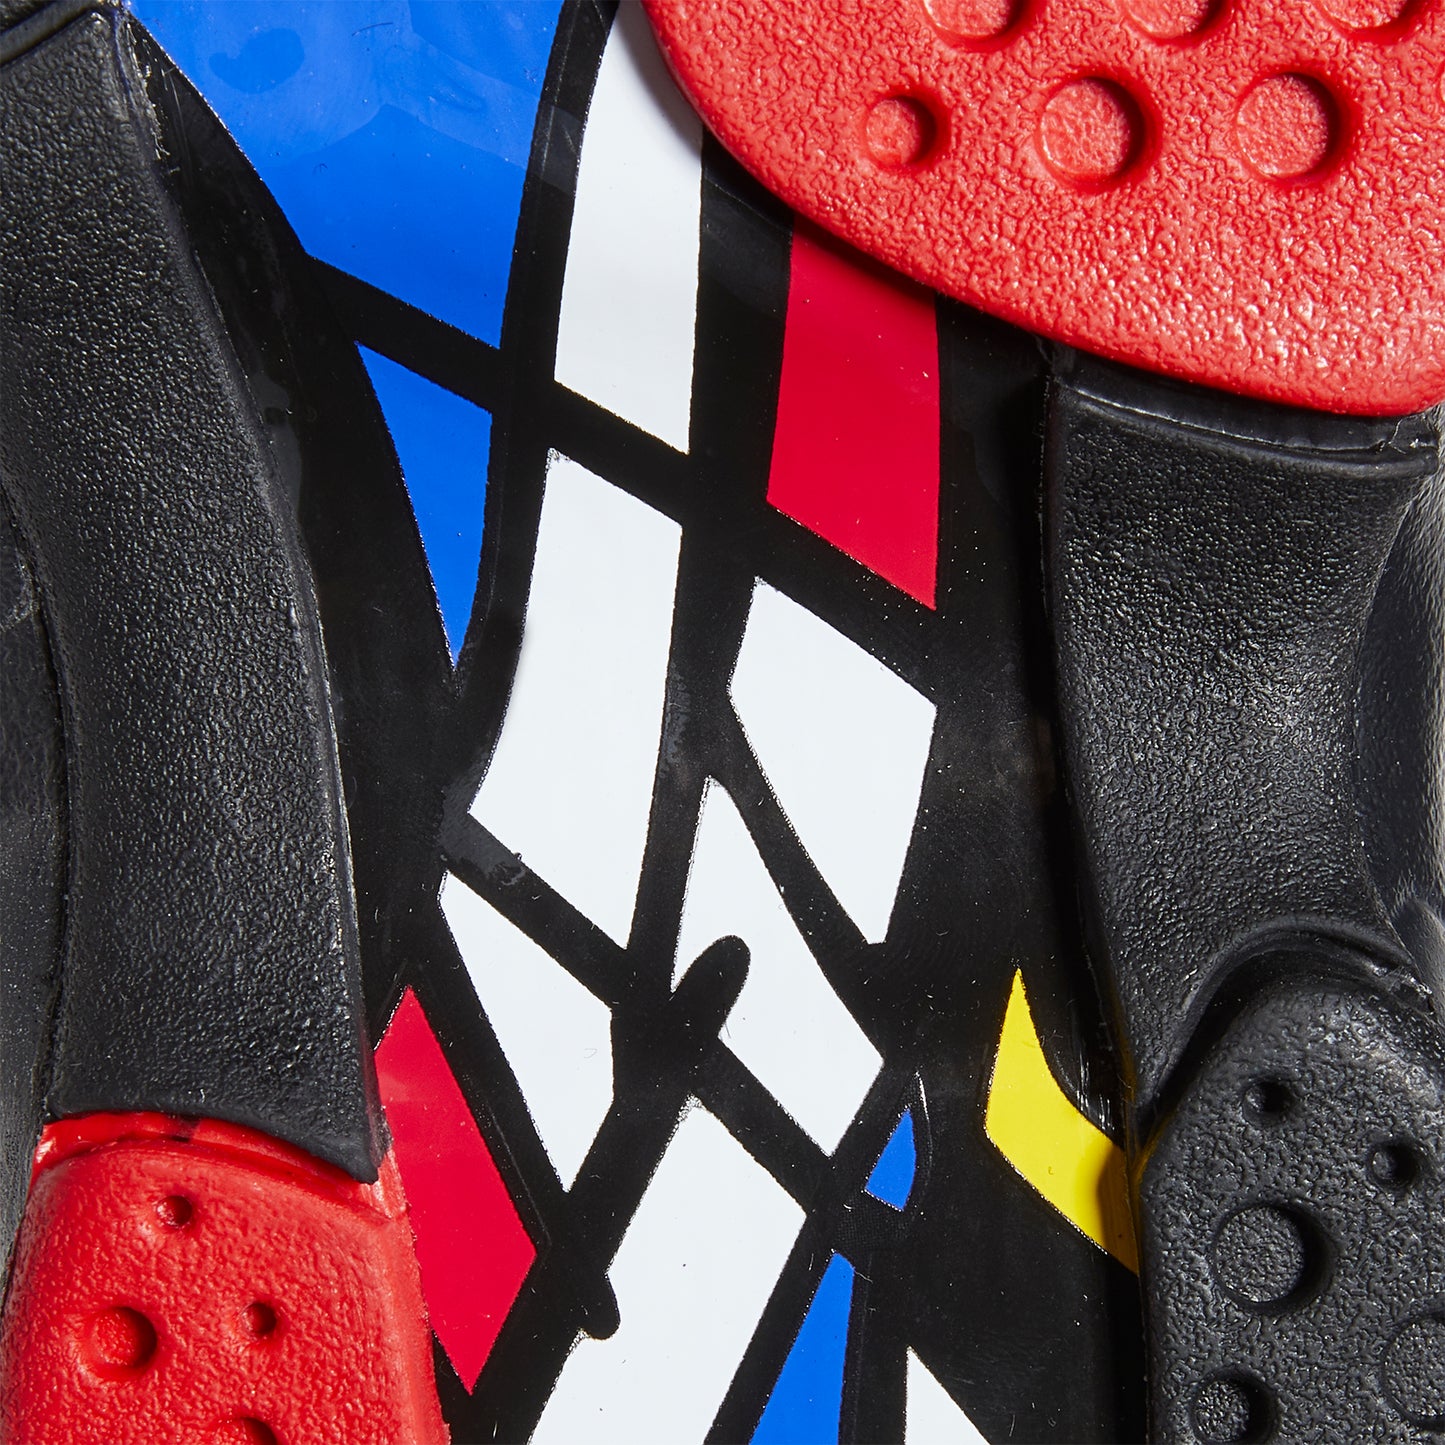 Nike Kids Air Jordan 8 Retro (Black/True Red/White)